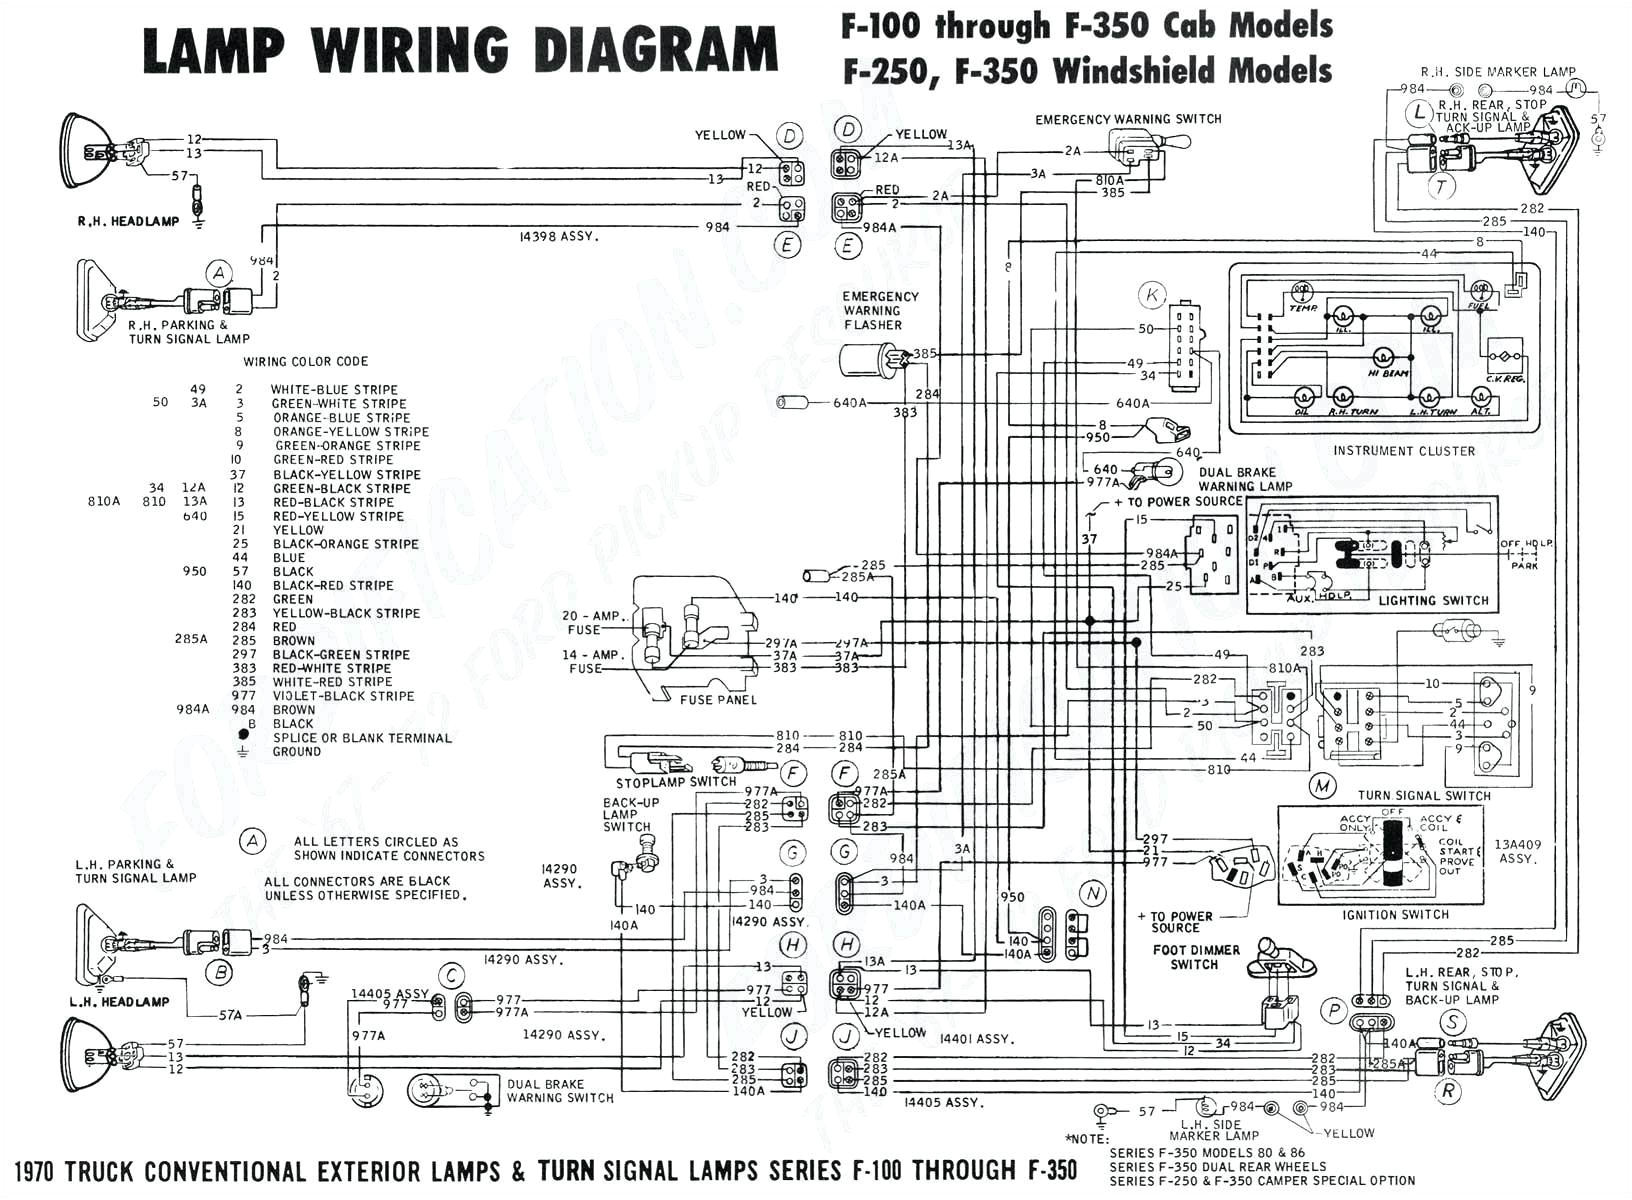 wiring diagrams book wiring diagram details automotive wiring diagram software automotive wiring diagram